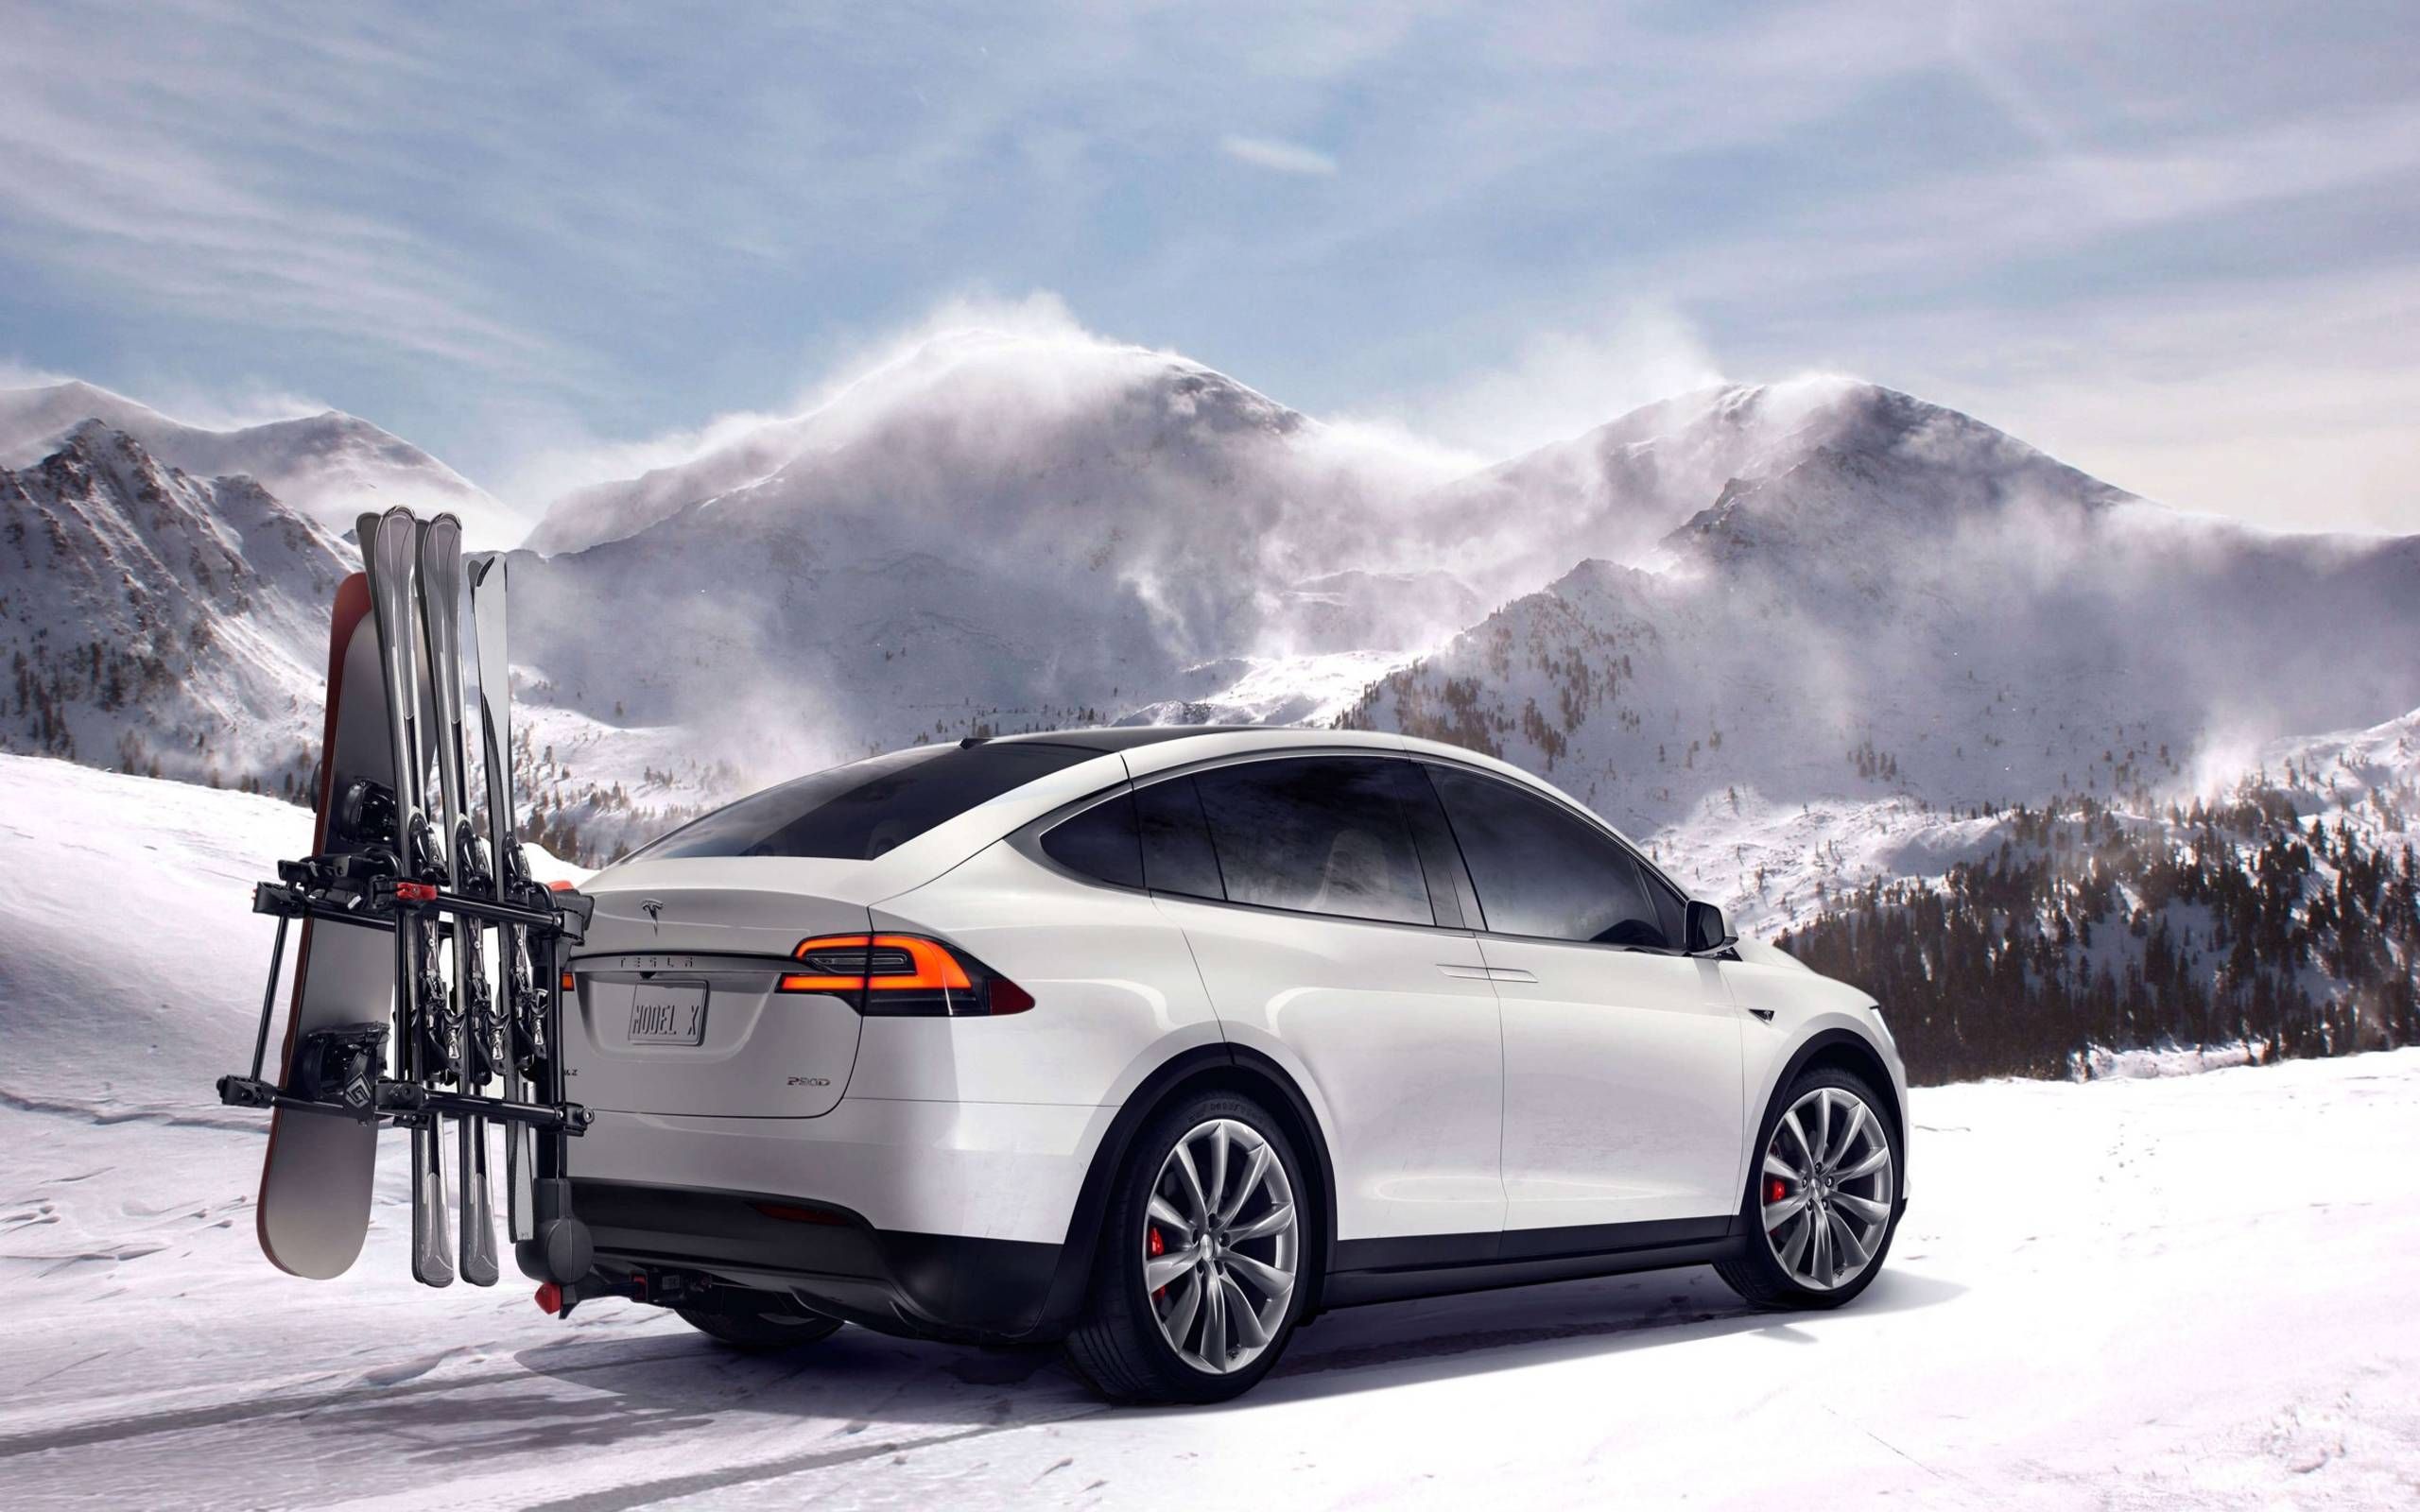 Maak plaats mannetje Gevangene Tesla Model X P100D drive review: It's thrilling (but complicated)